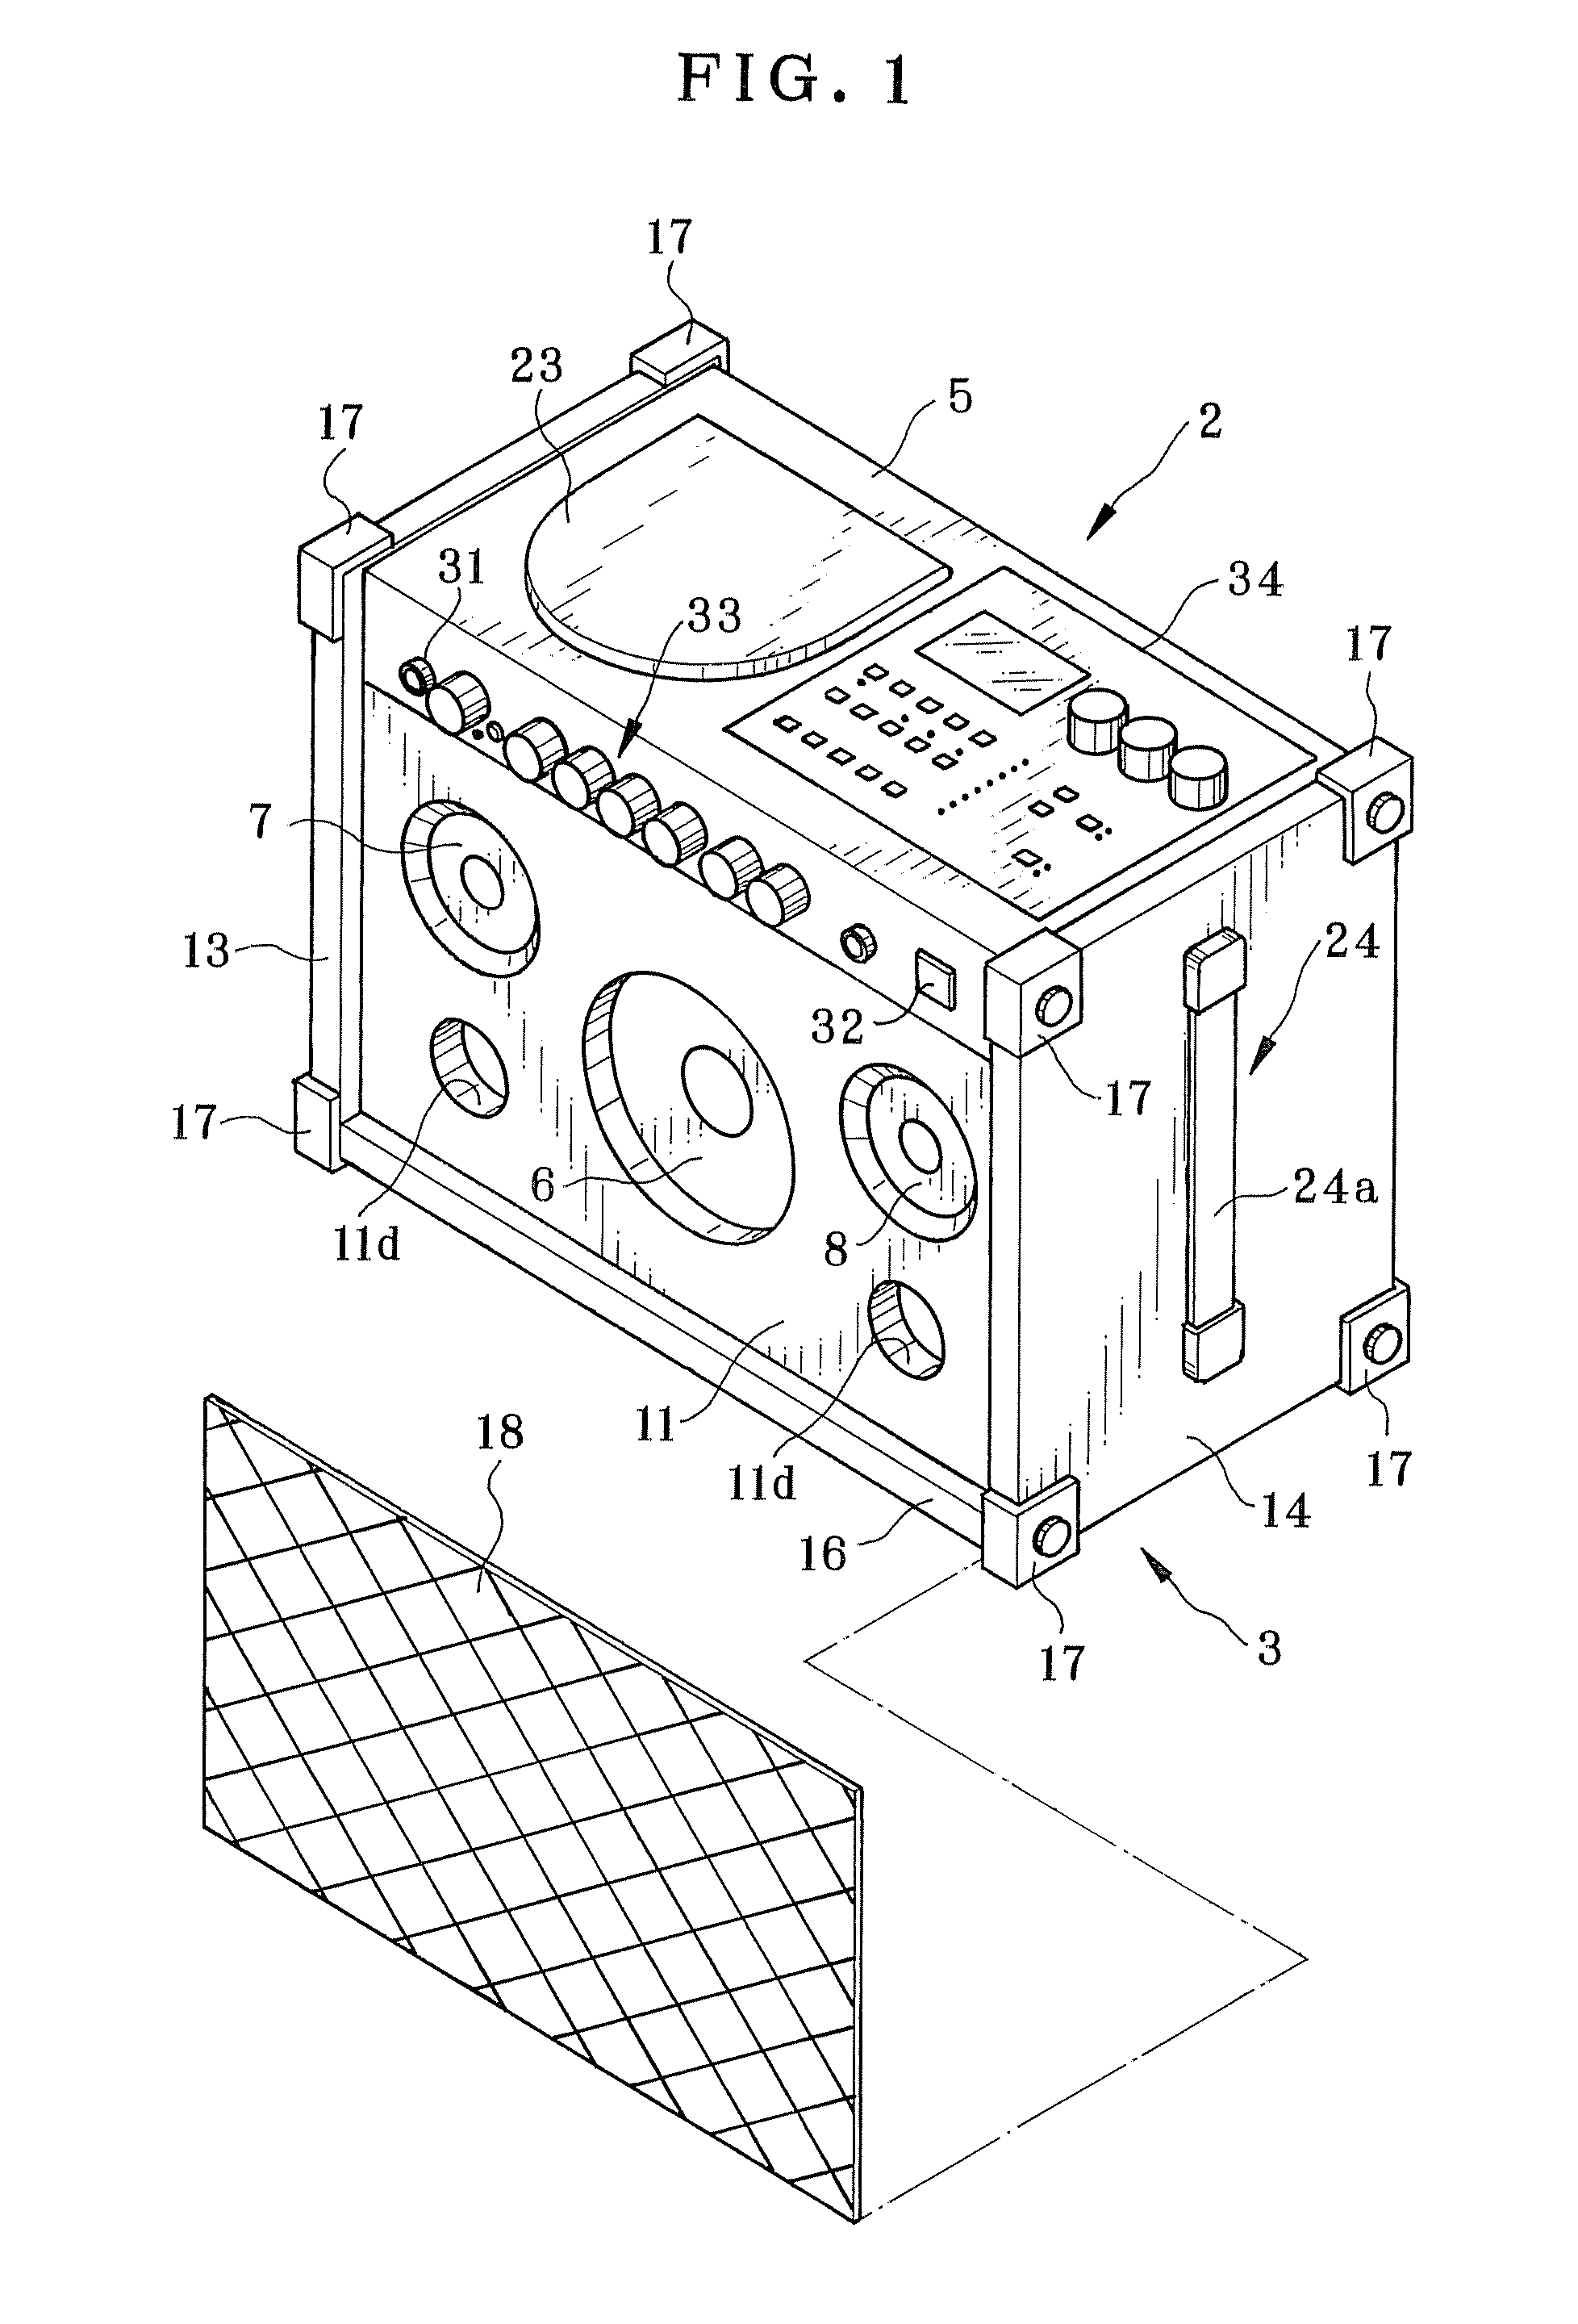 Sound amplifier with speaker